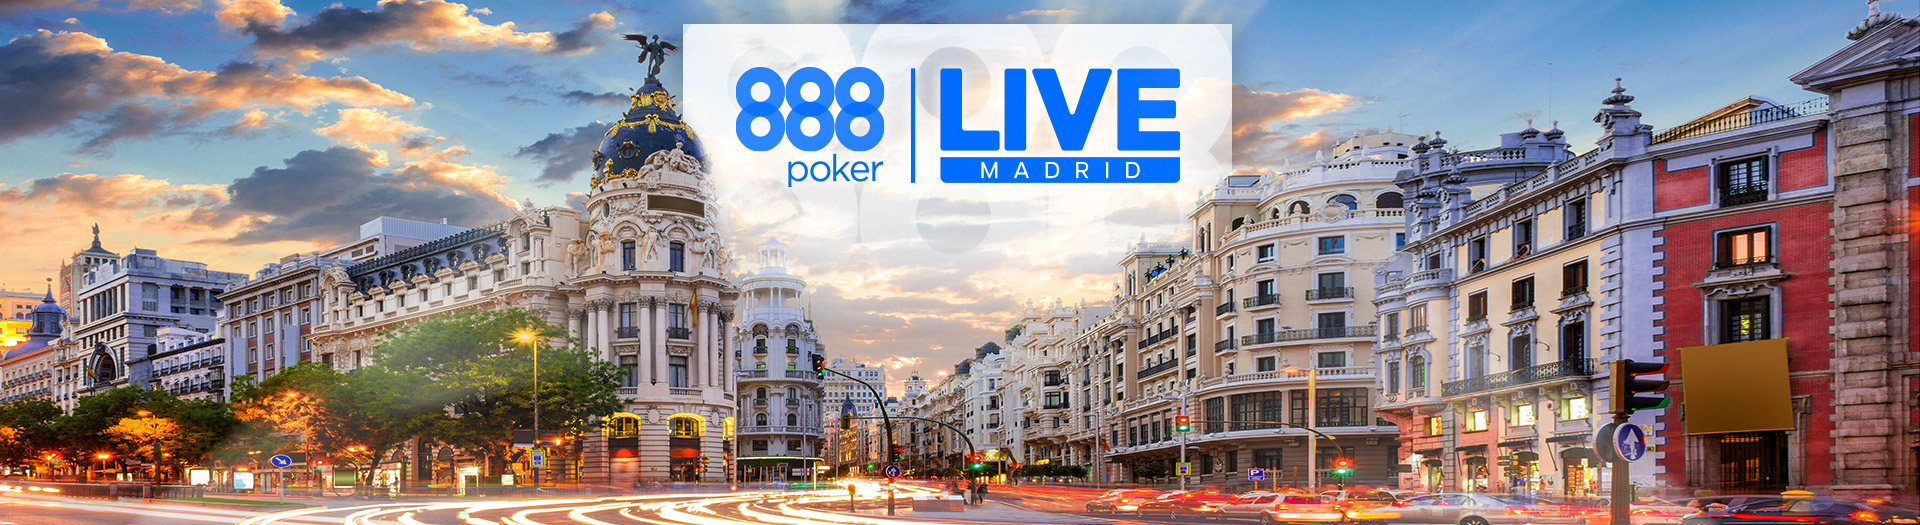 TS-39001-Live-Madrid-main-image_LP-1669197037390_tcm2000-572795